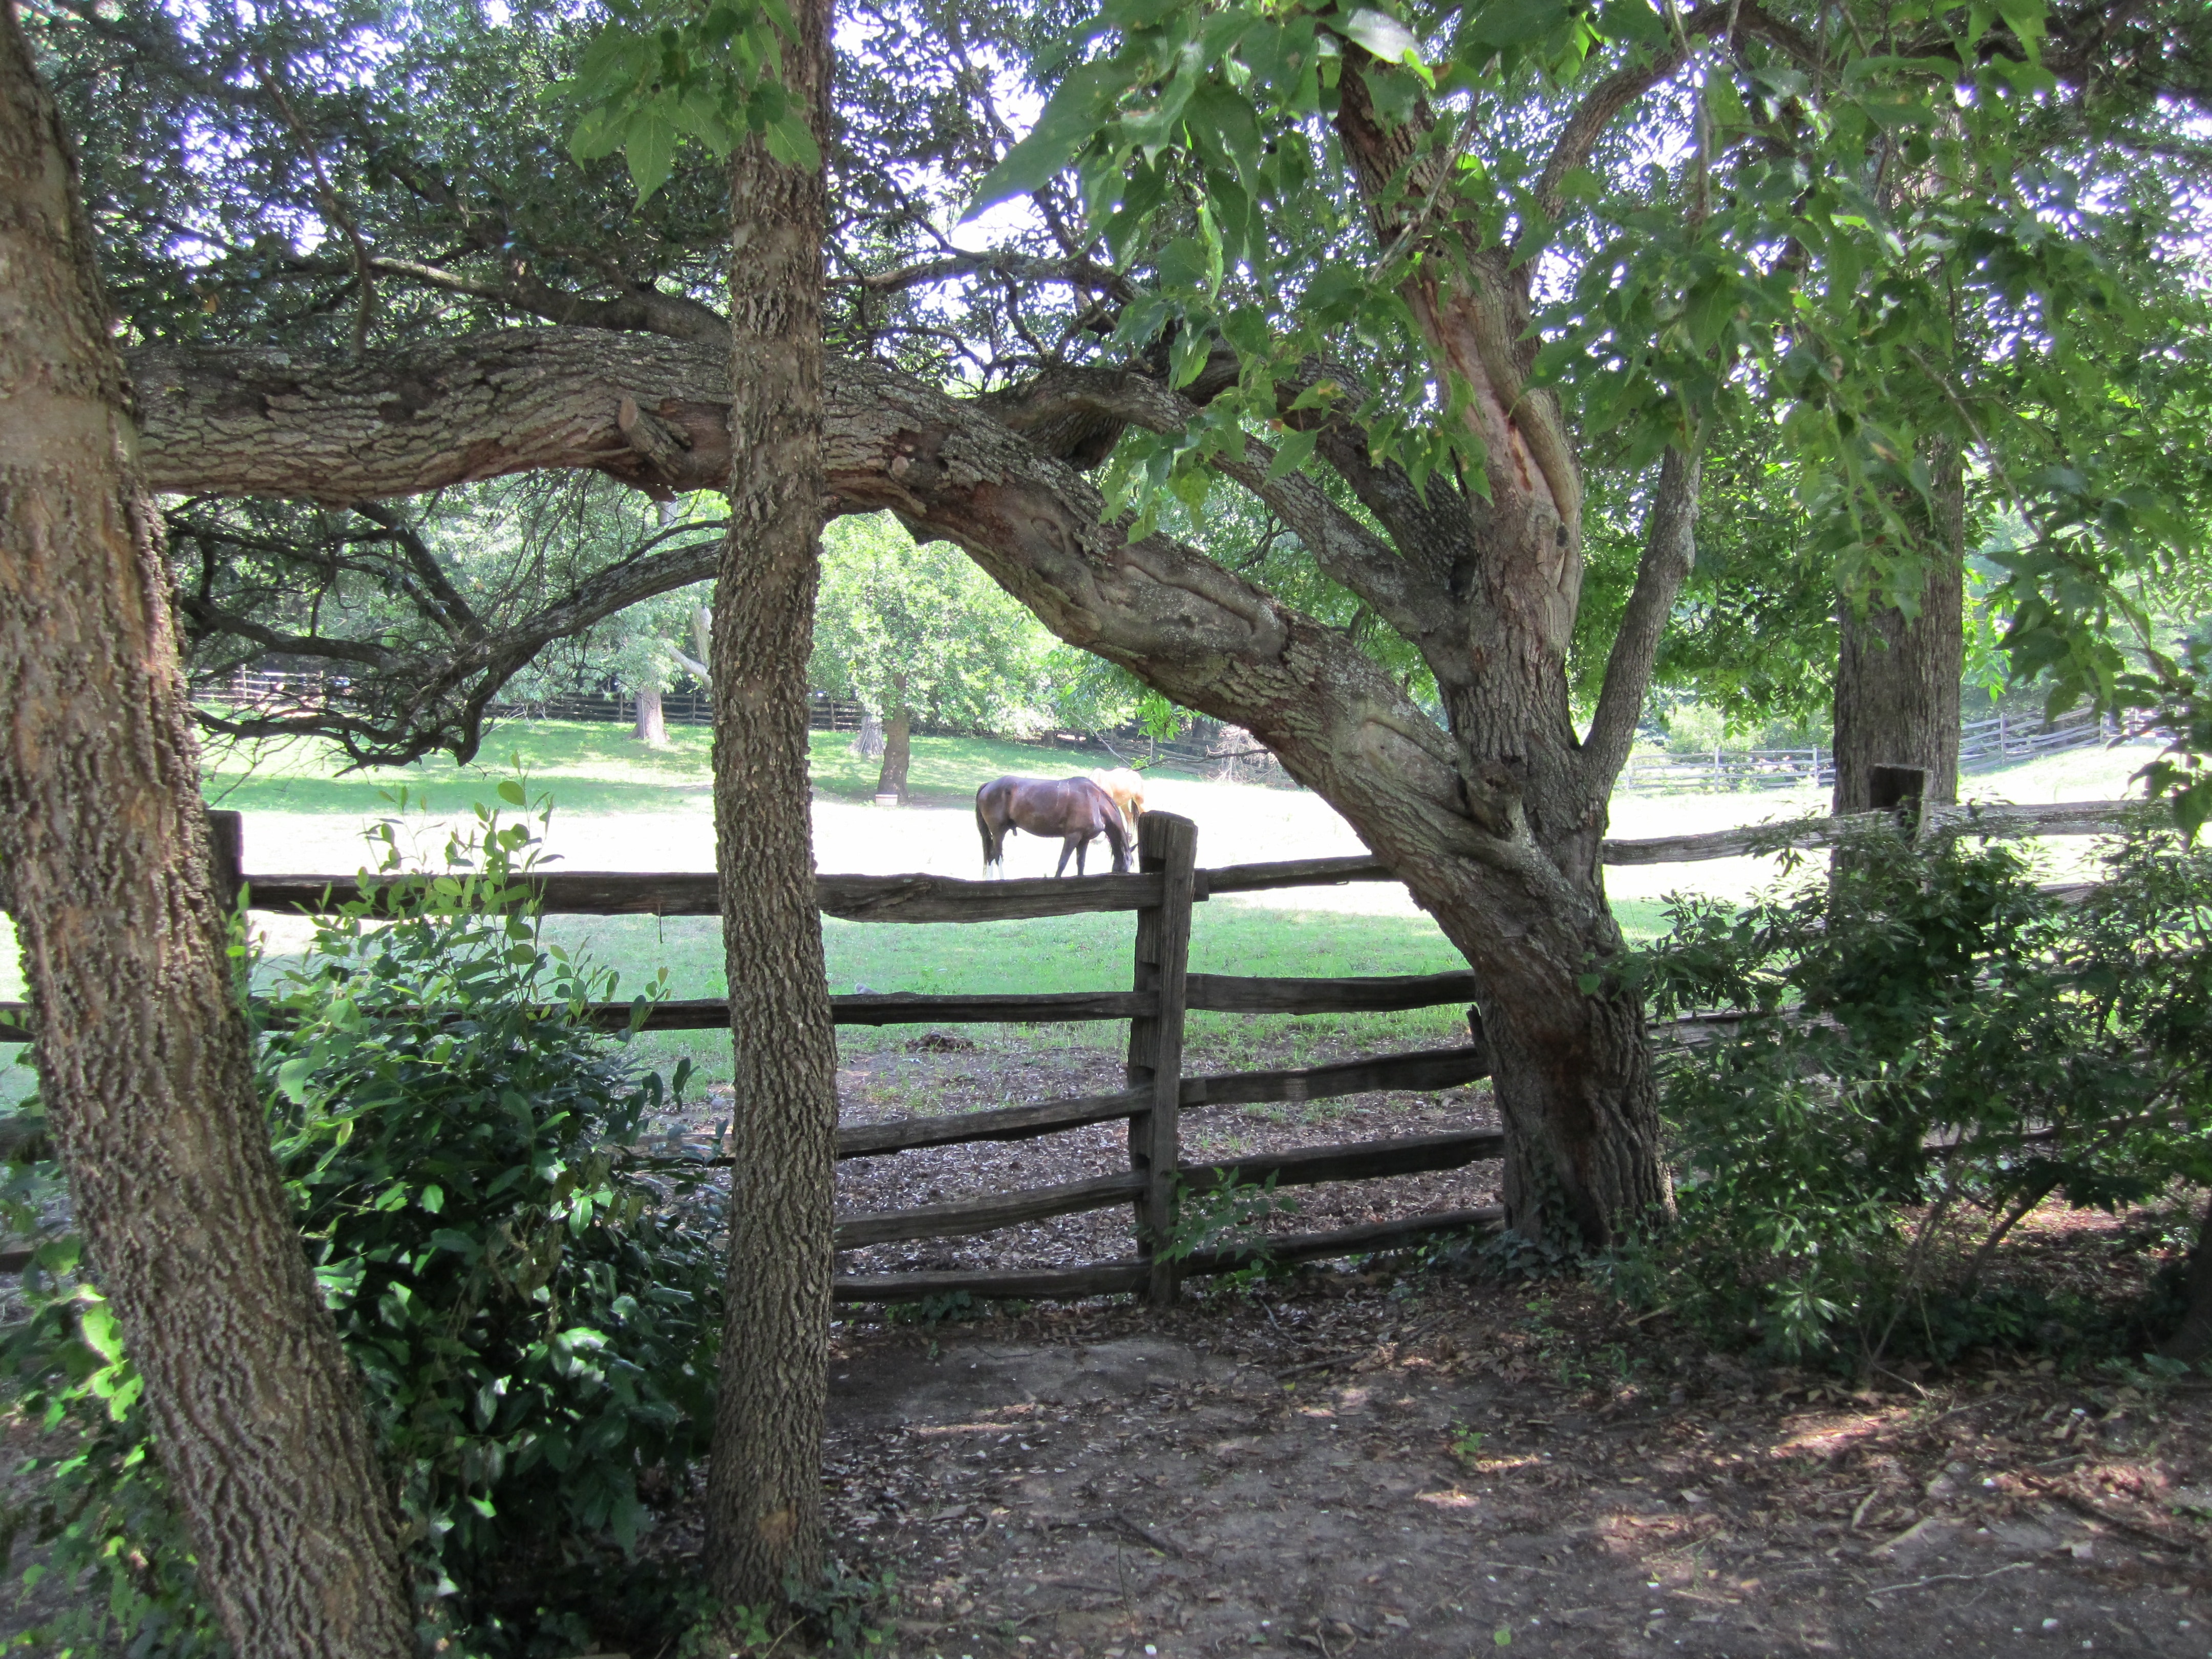 Horse in field at Williamsburg, Virginia